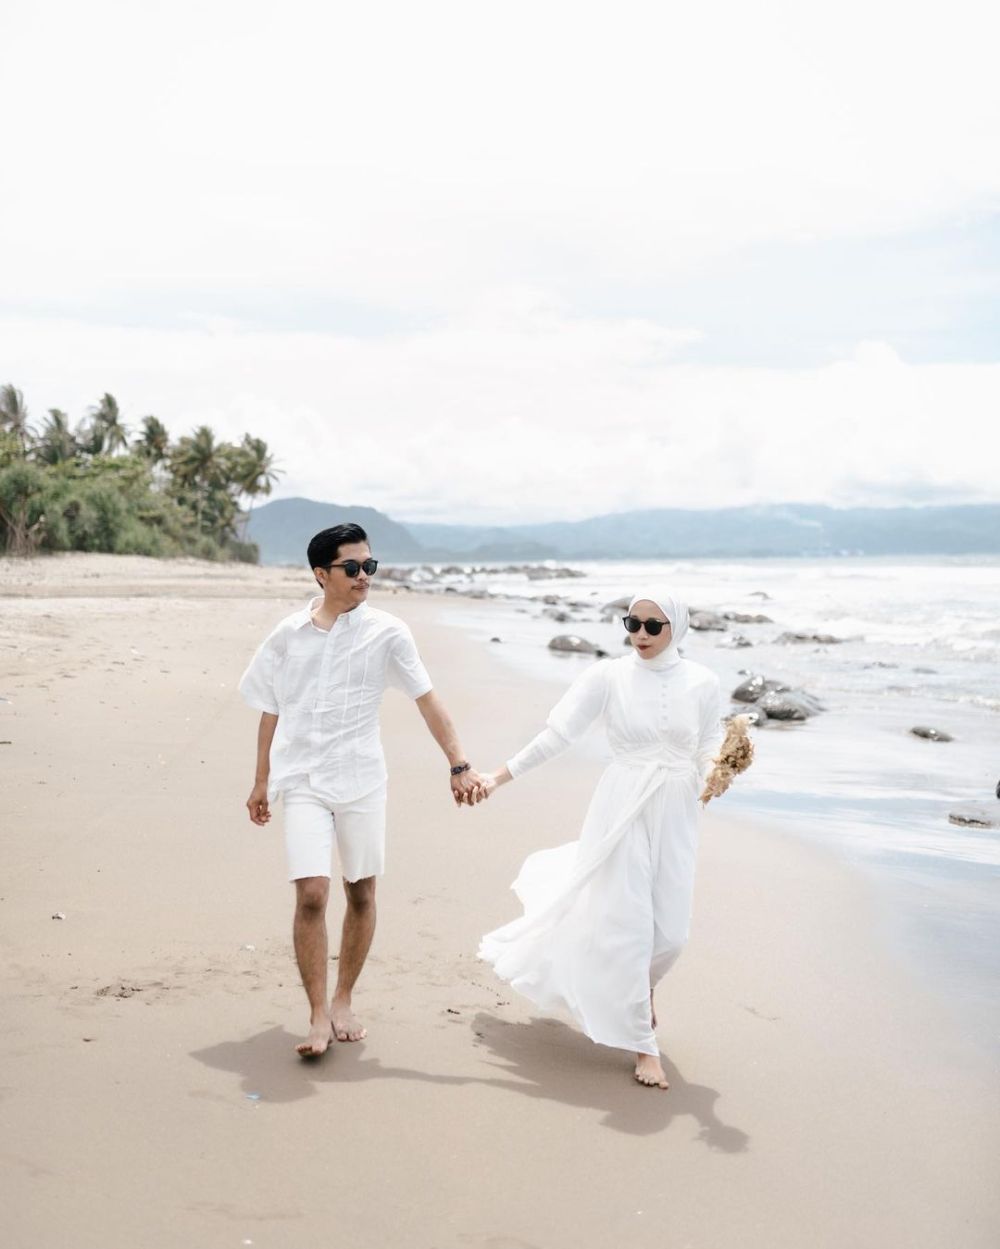 9 Ide Outfit Couple untuk Photoshoot, Casual hingga Batik